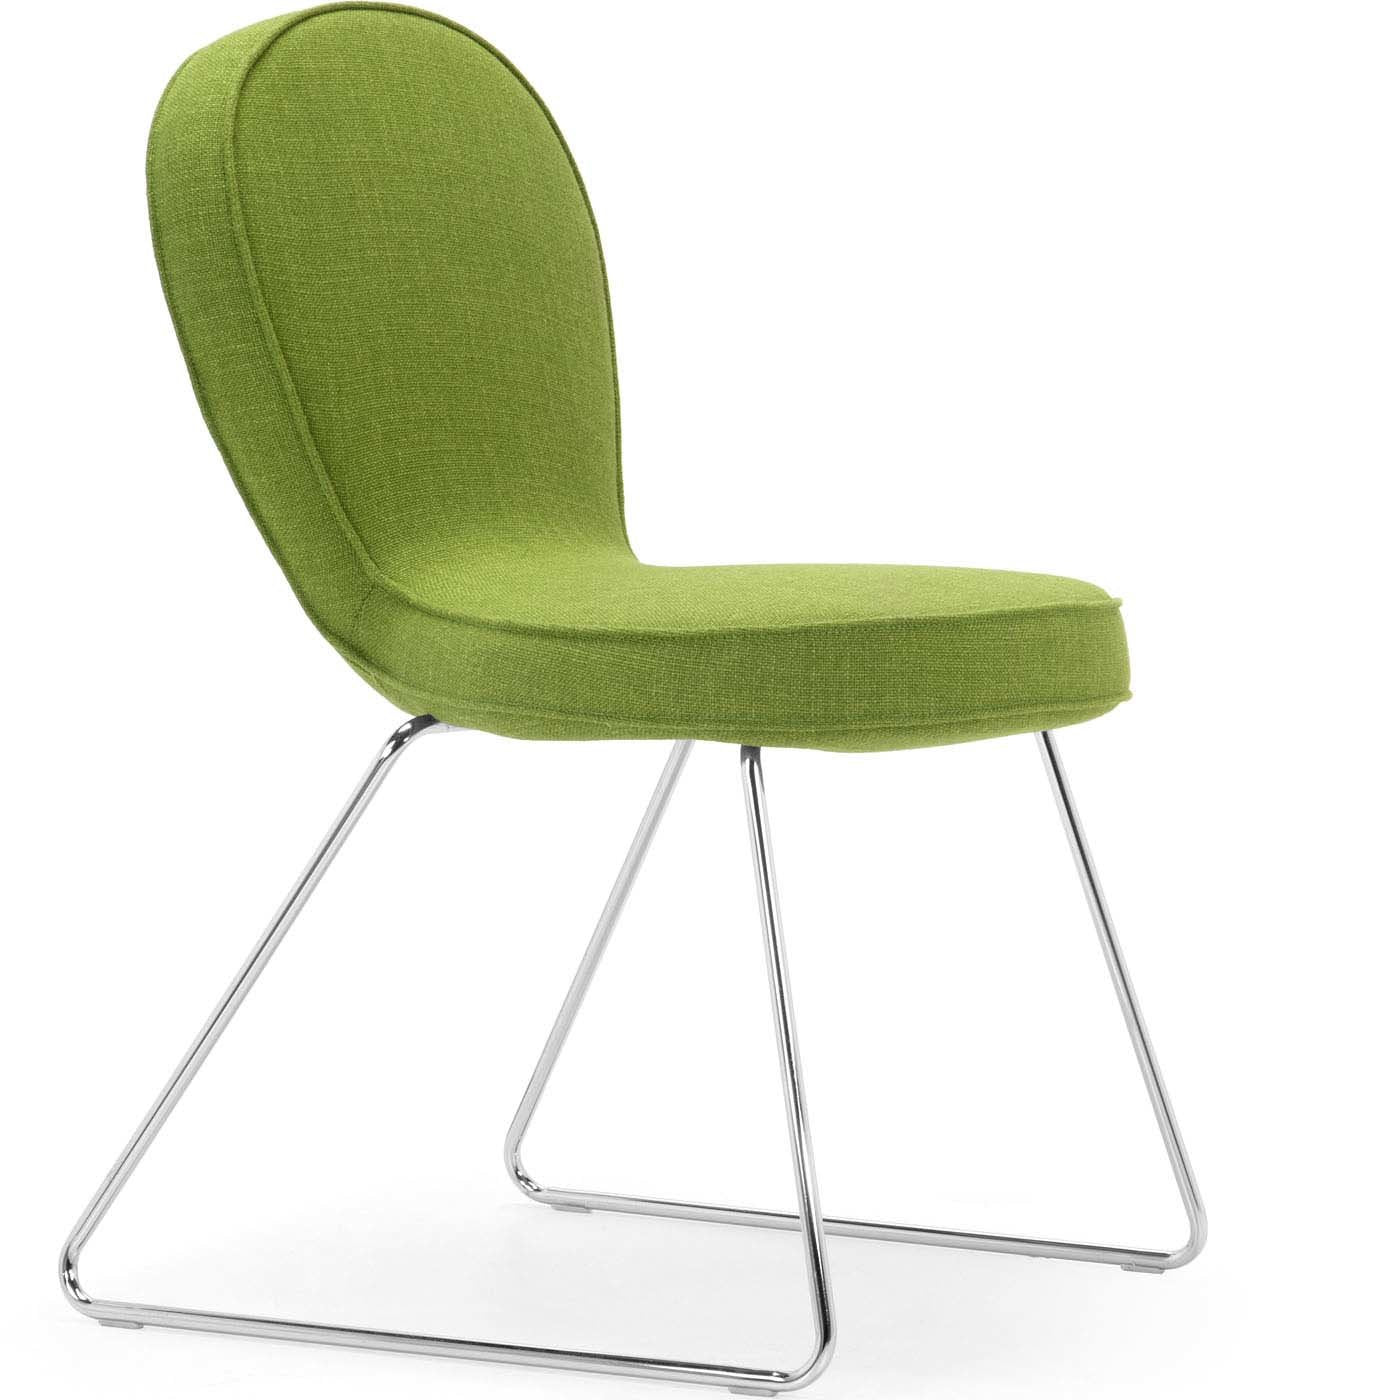 B4 Chair by Simone Micheli - Alternative view 2